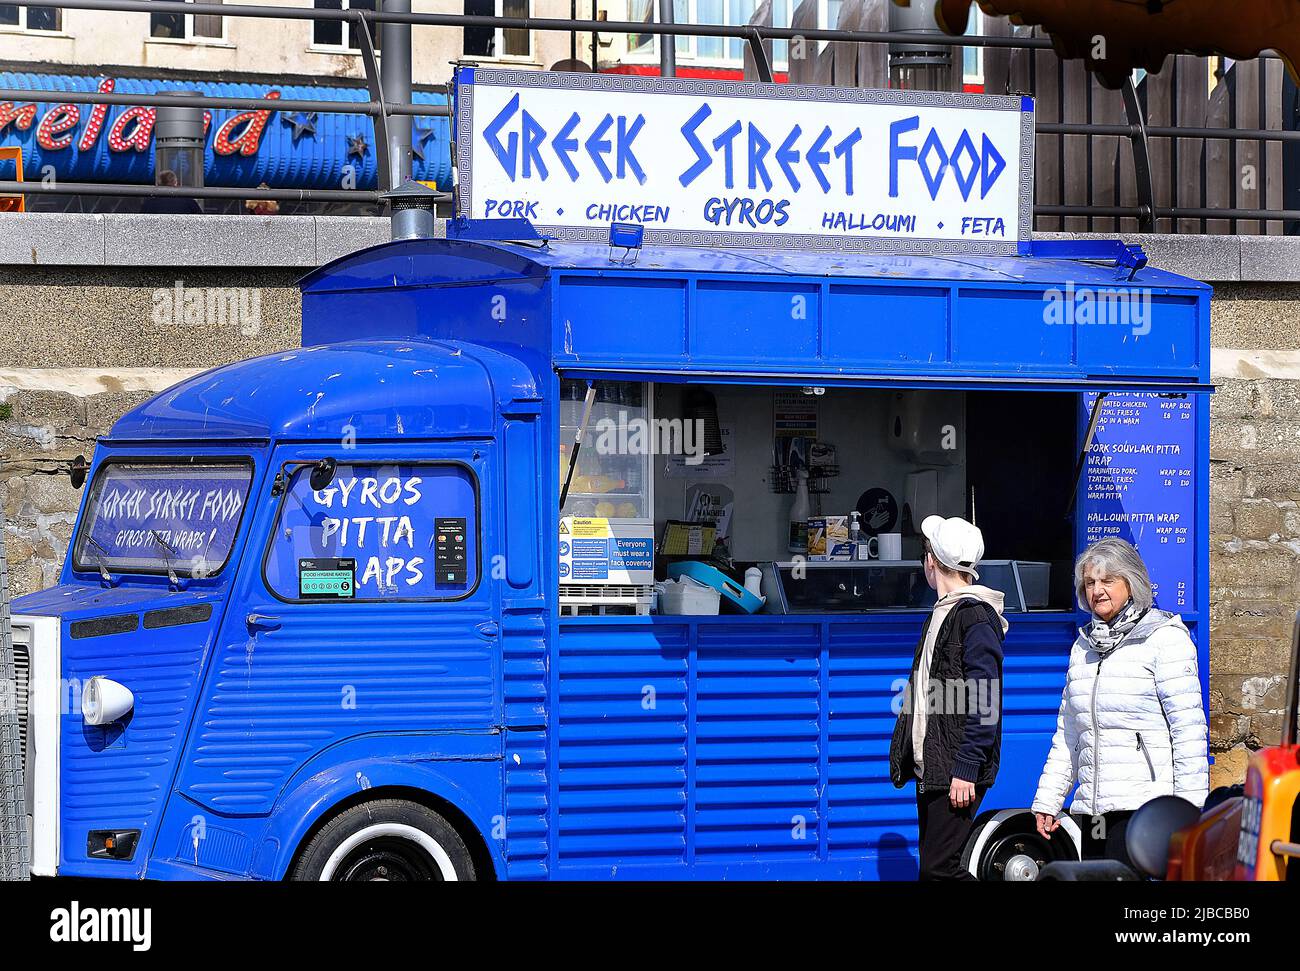 Greek street food van on the seafront at Bridlington, yorkshire, UK. Stock Photo